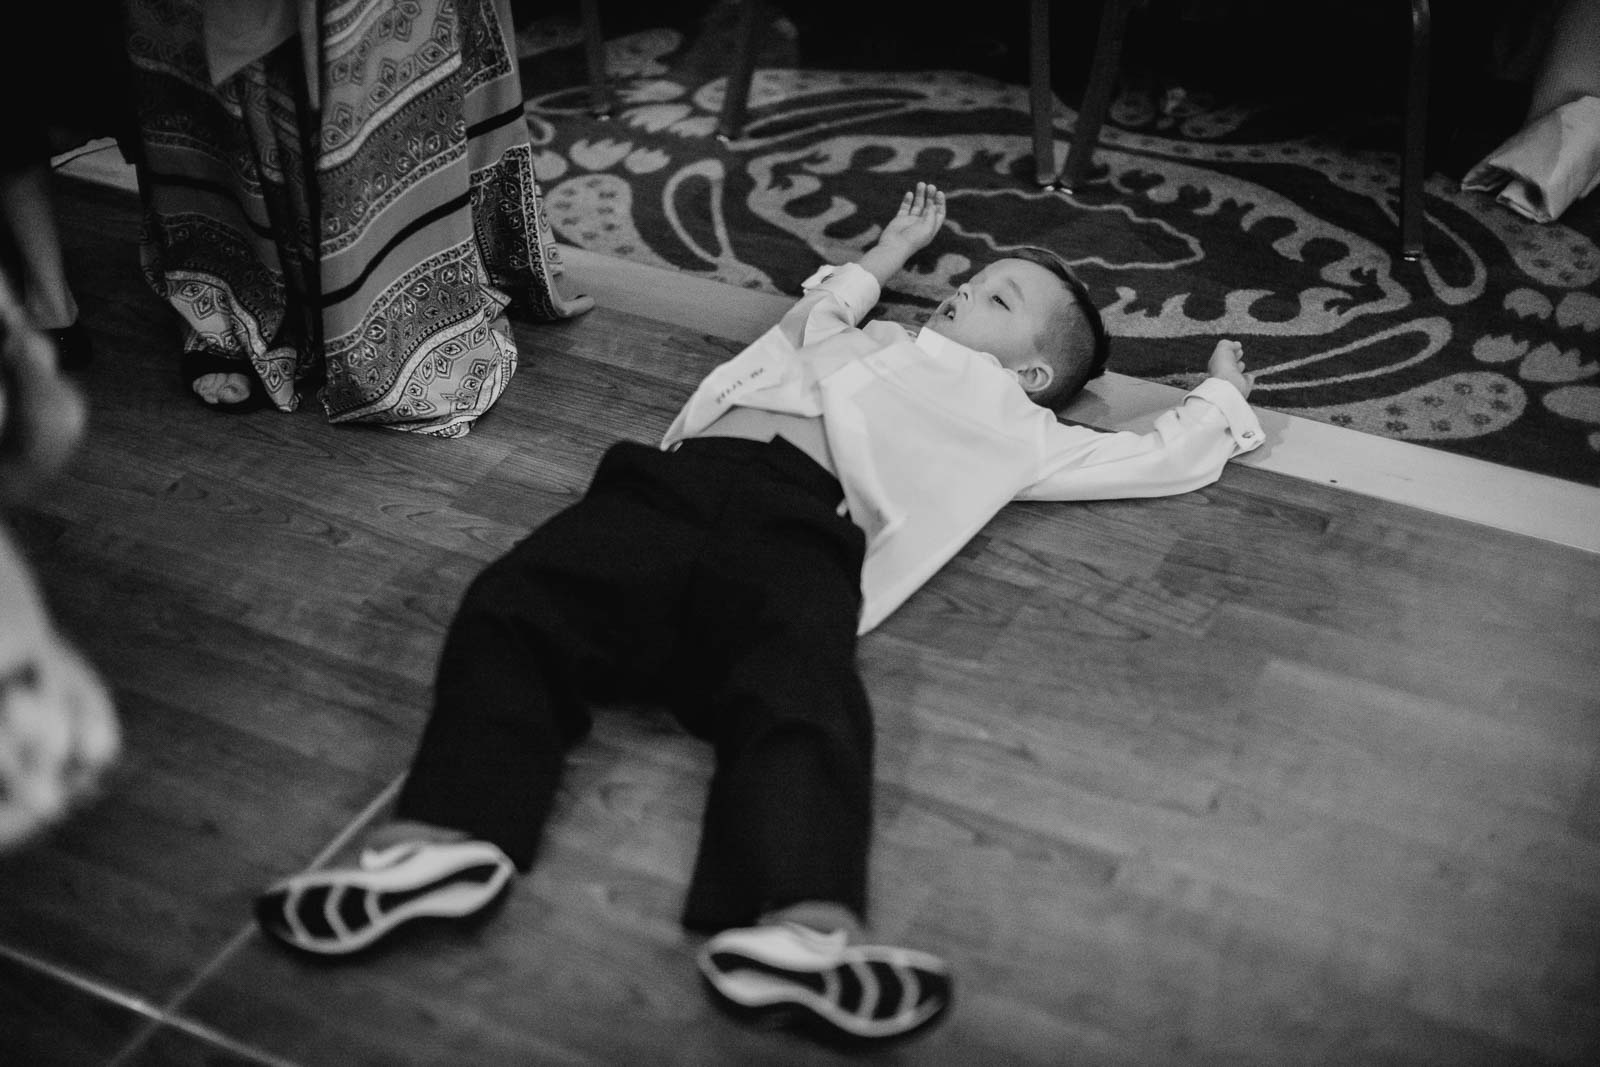 The ring bearer Saenz asleep during the wedding reception floor